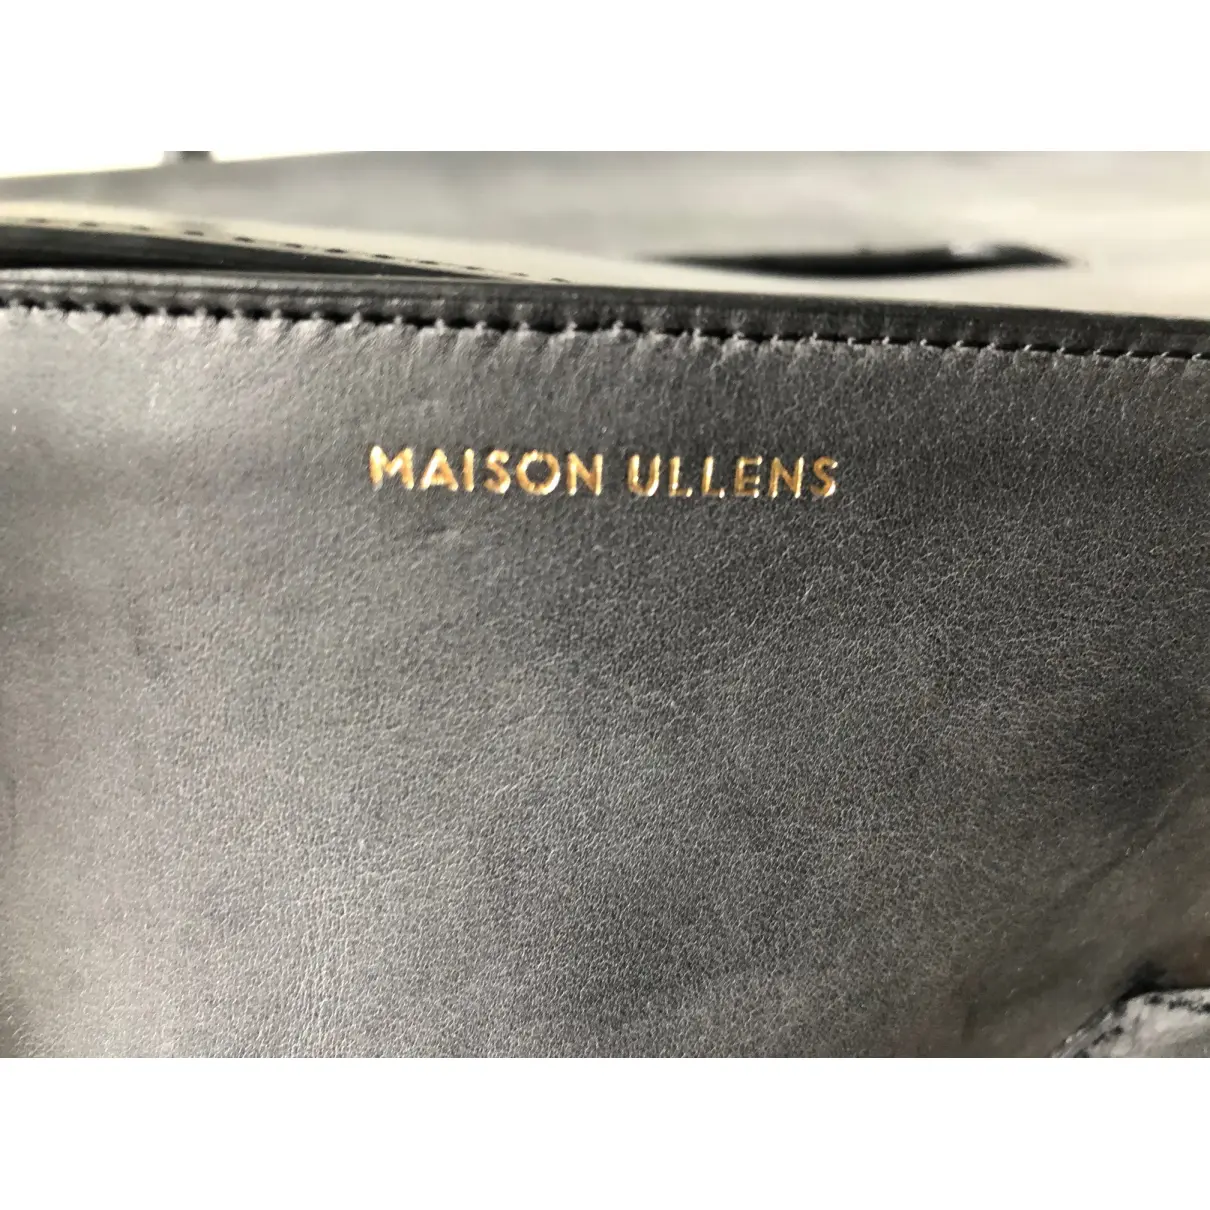 Luxury Maison Ullens Handbags Women